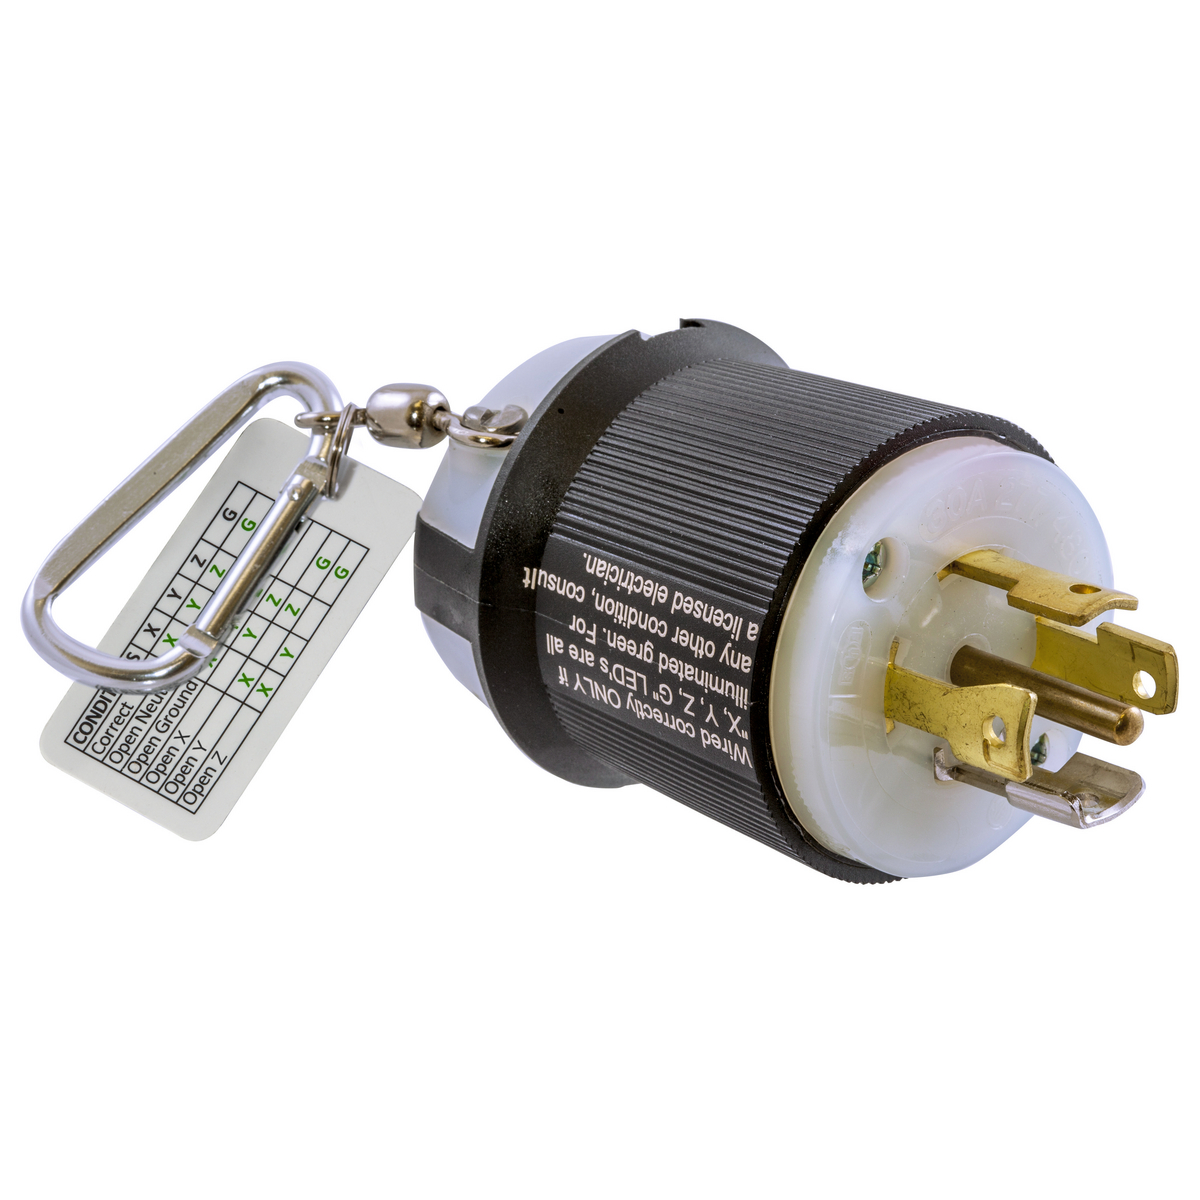 Amtech T1154 3 digit combination cable lock